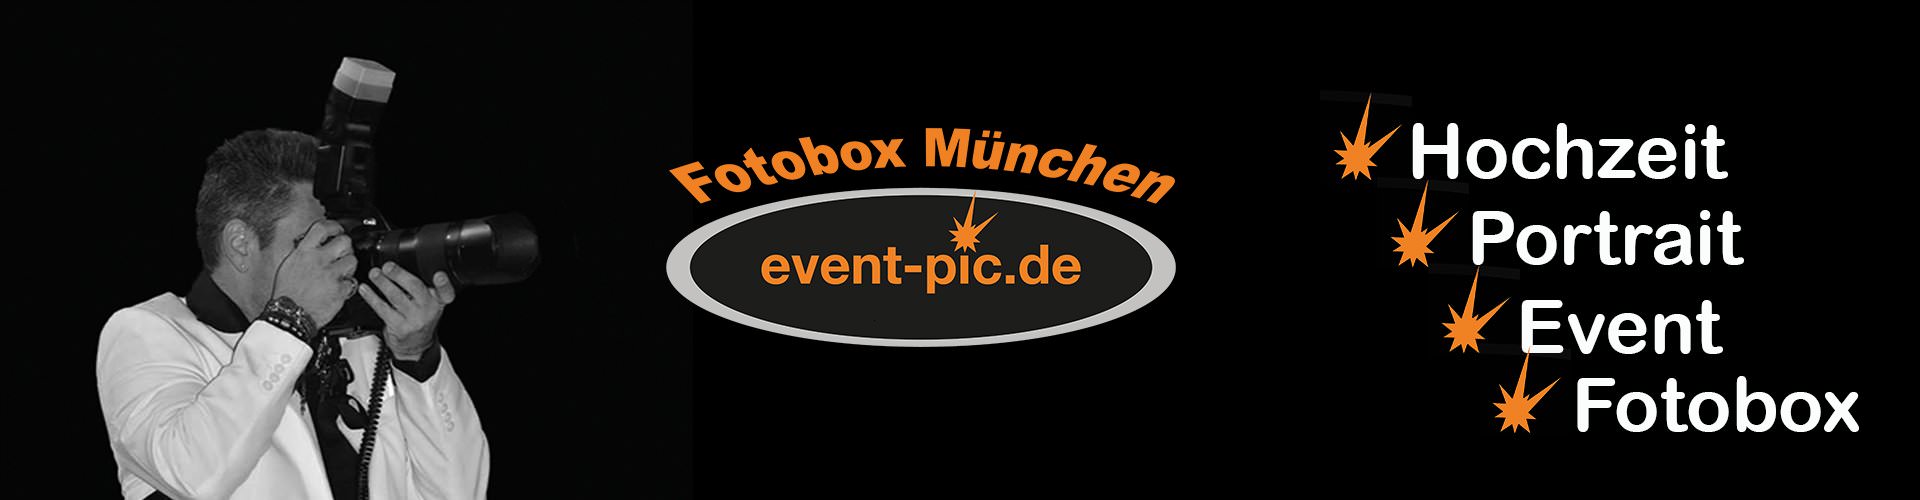 Fotobox München_1a